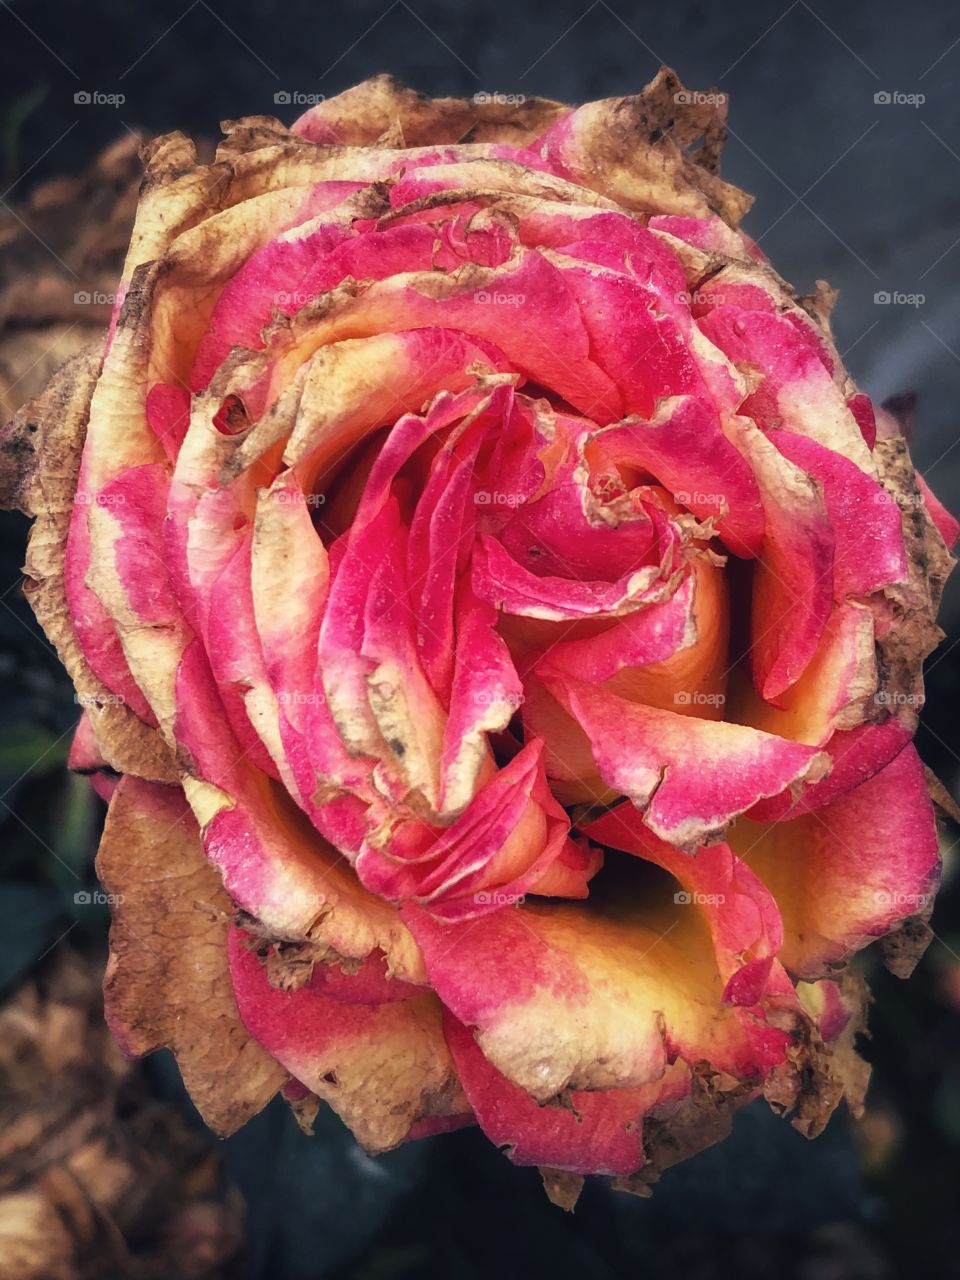 Death rose